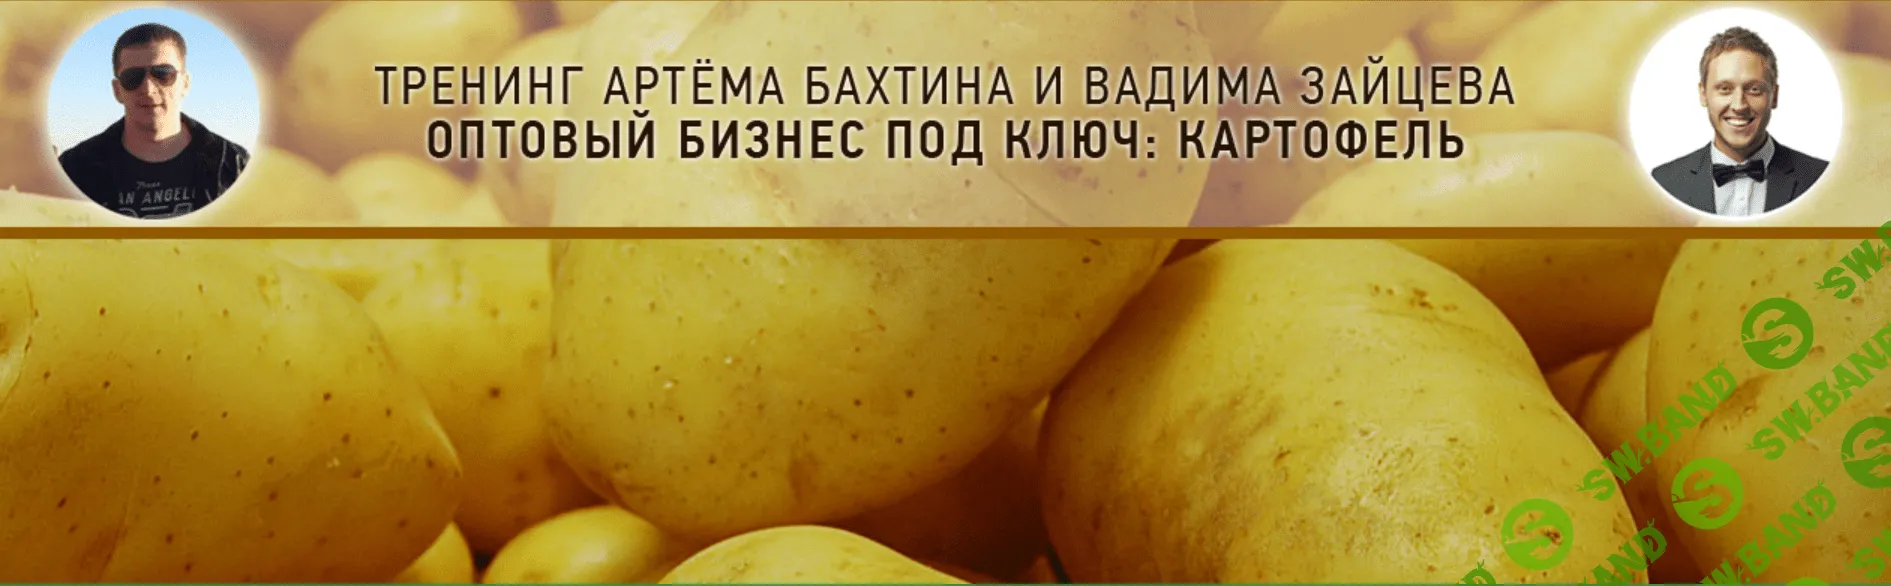 [Артем Бахтин] Оптовый бизнес под ключ: Картофель (2018)